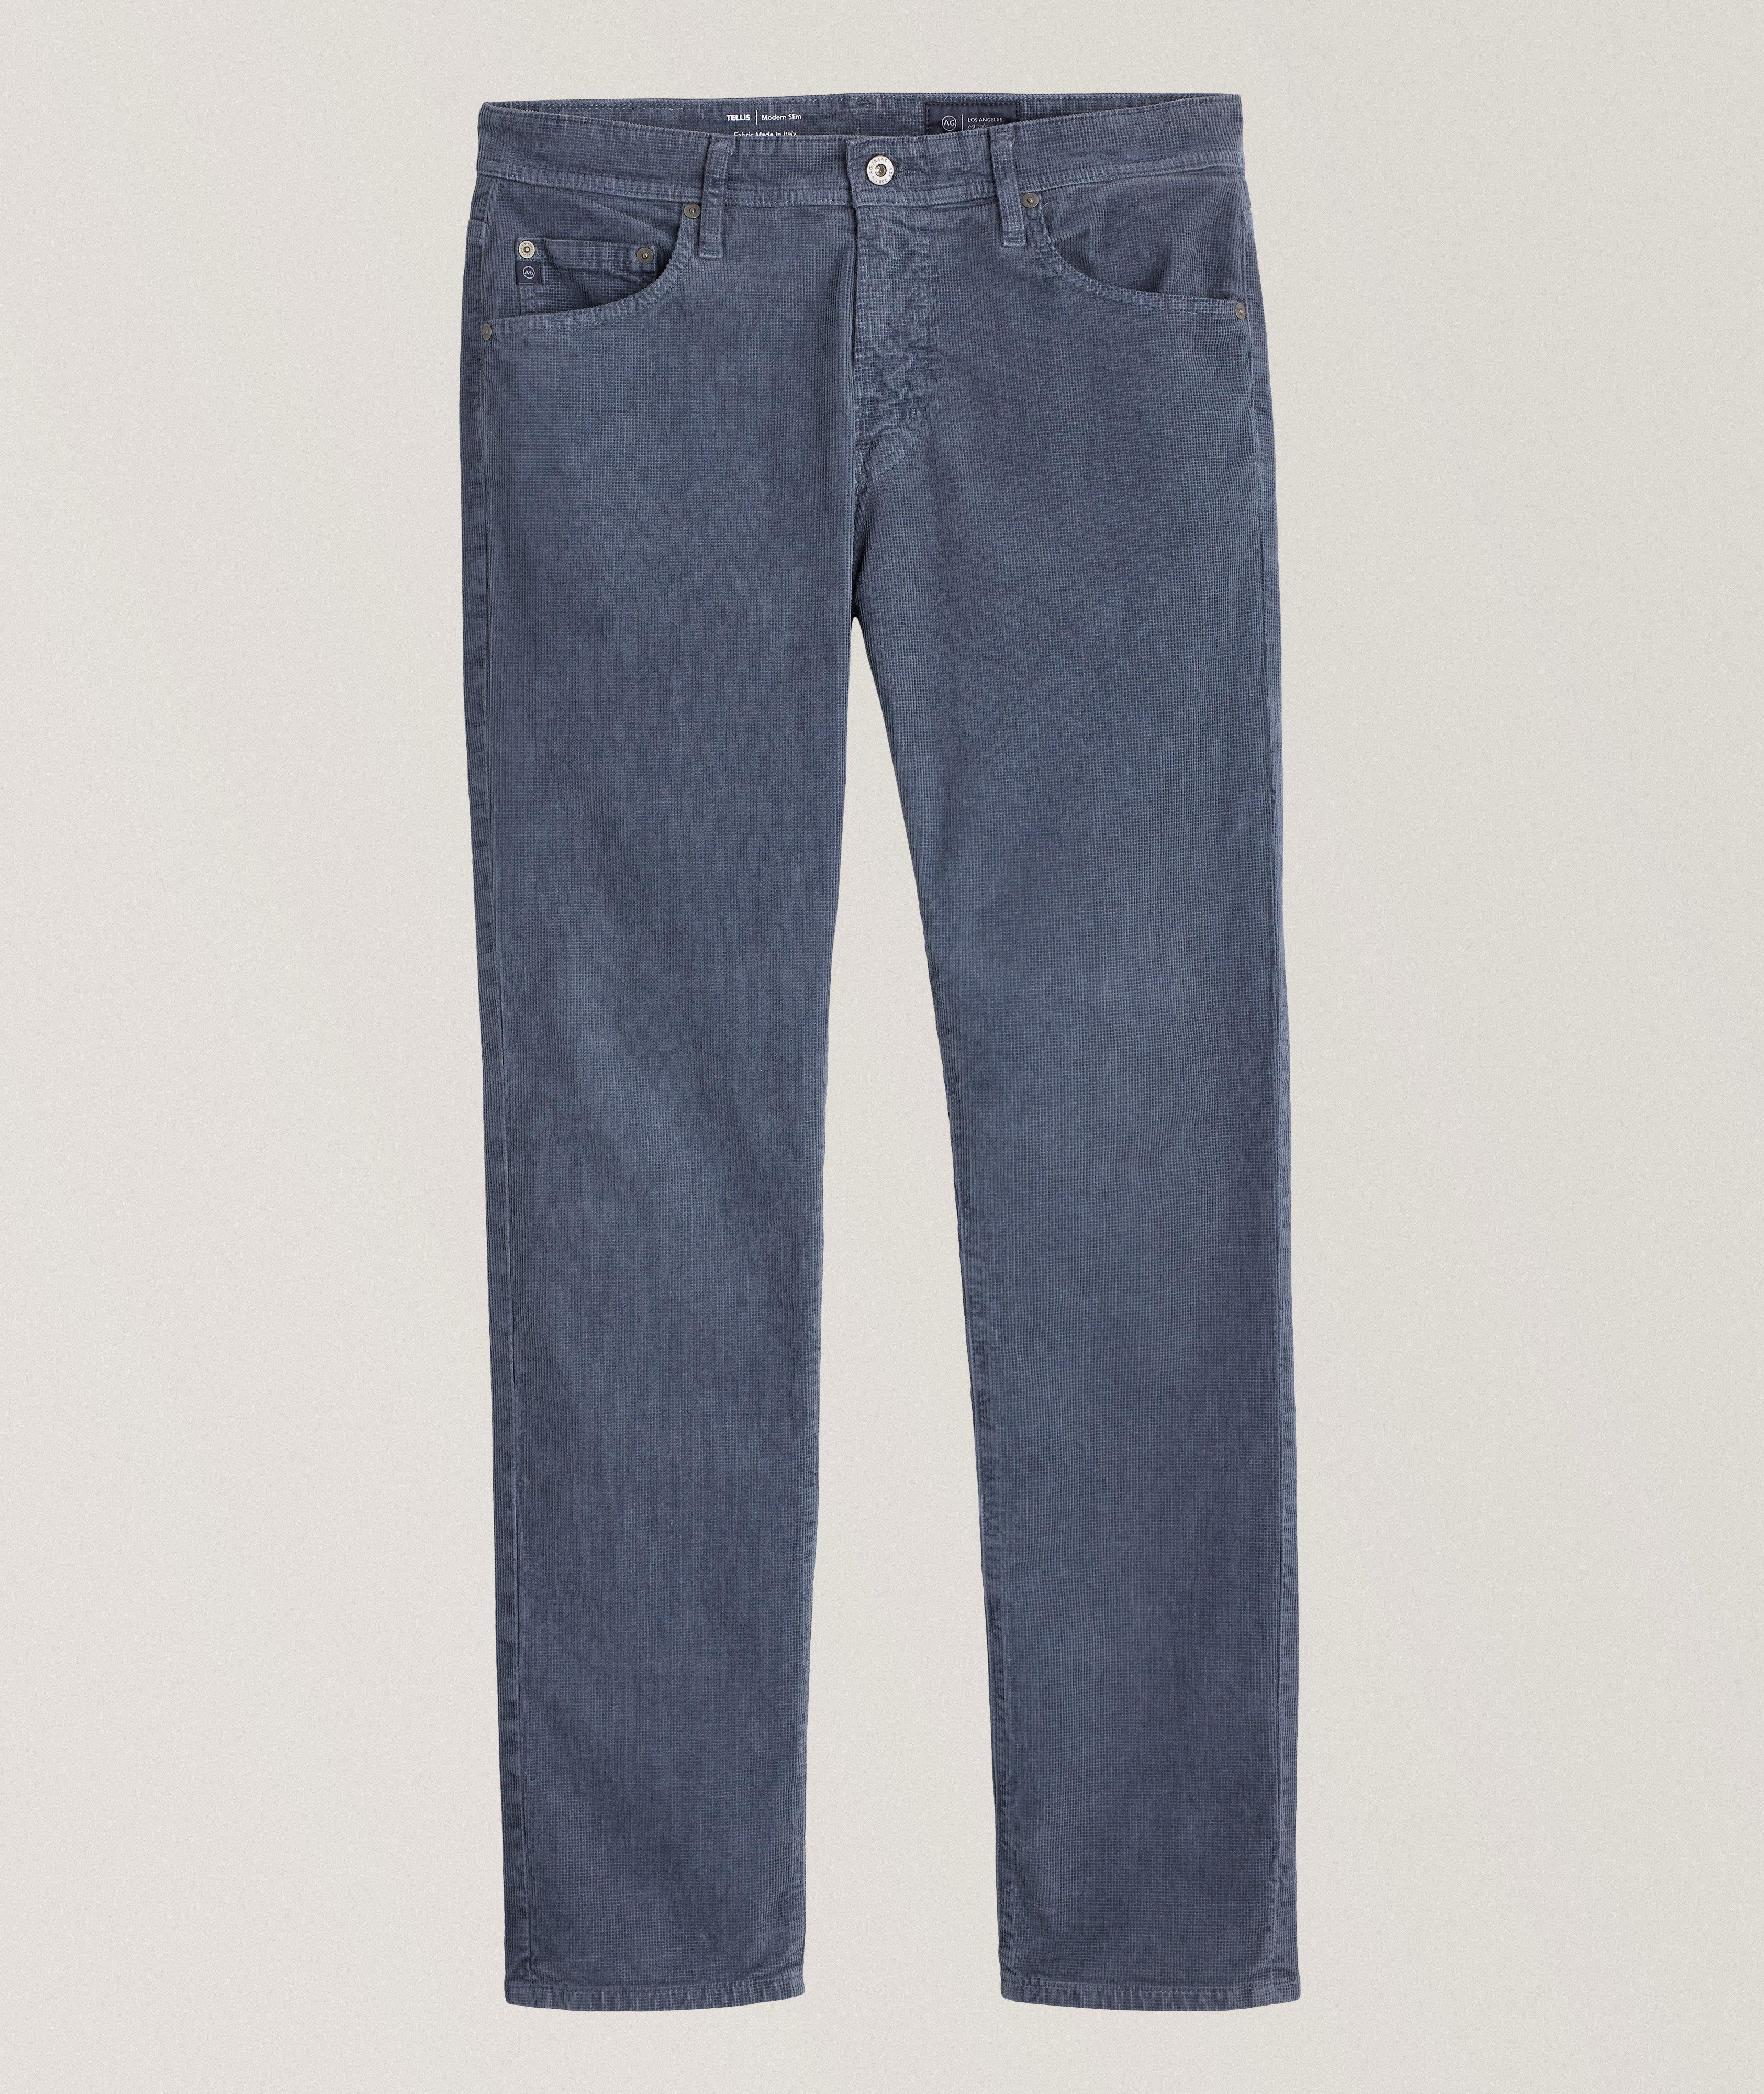 Tellis Crosshatch Stretch-Cotton Jeans image 0